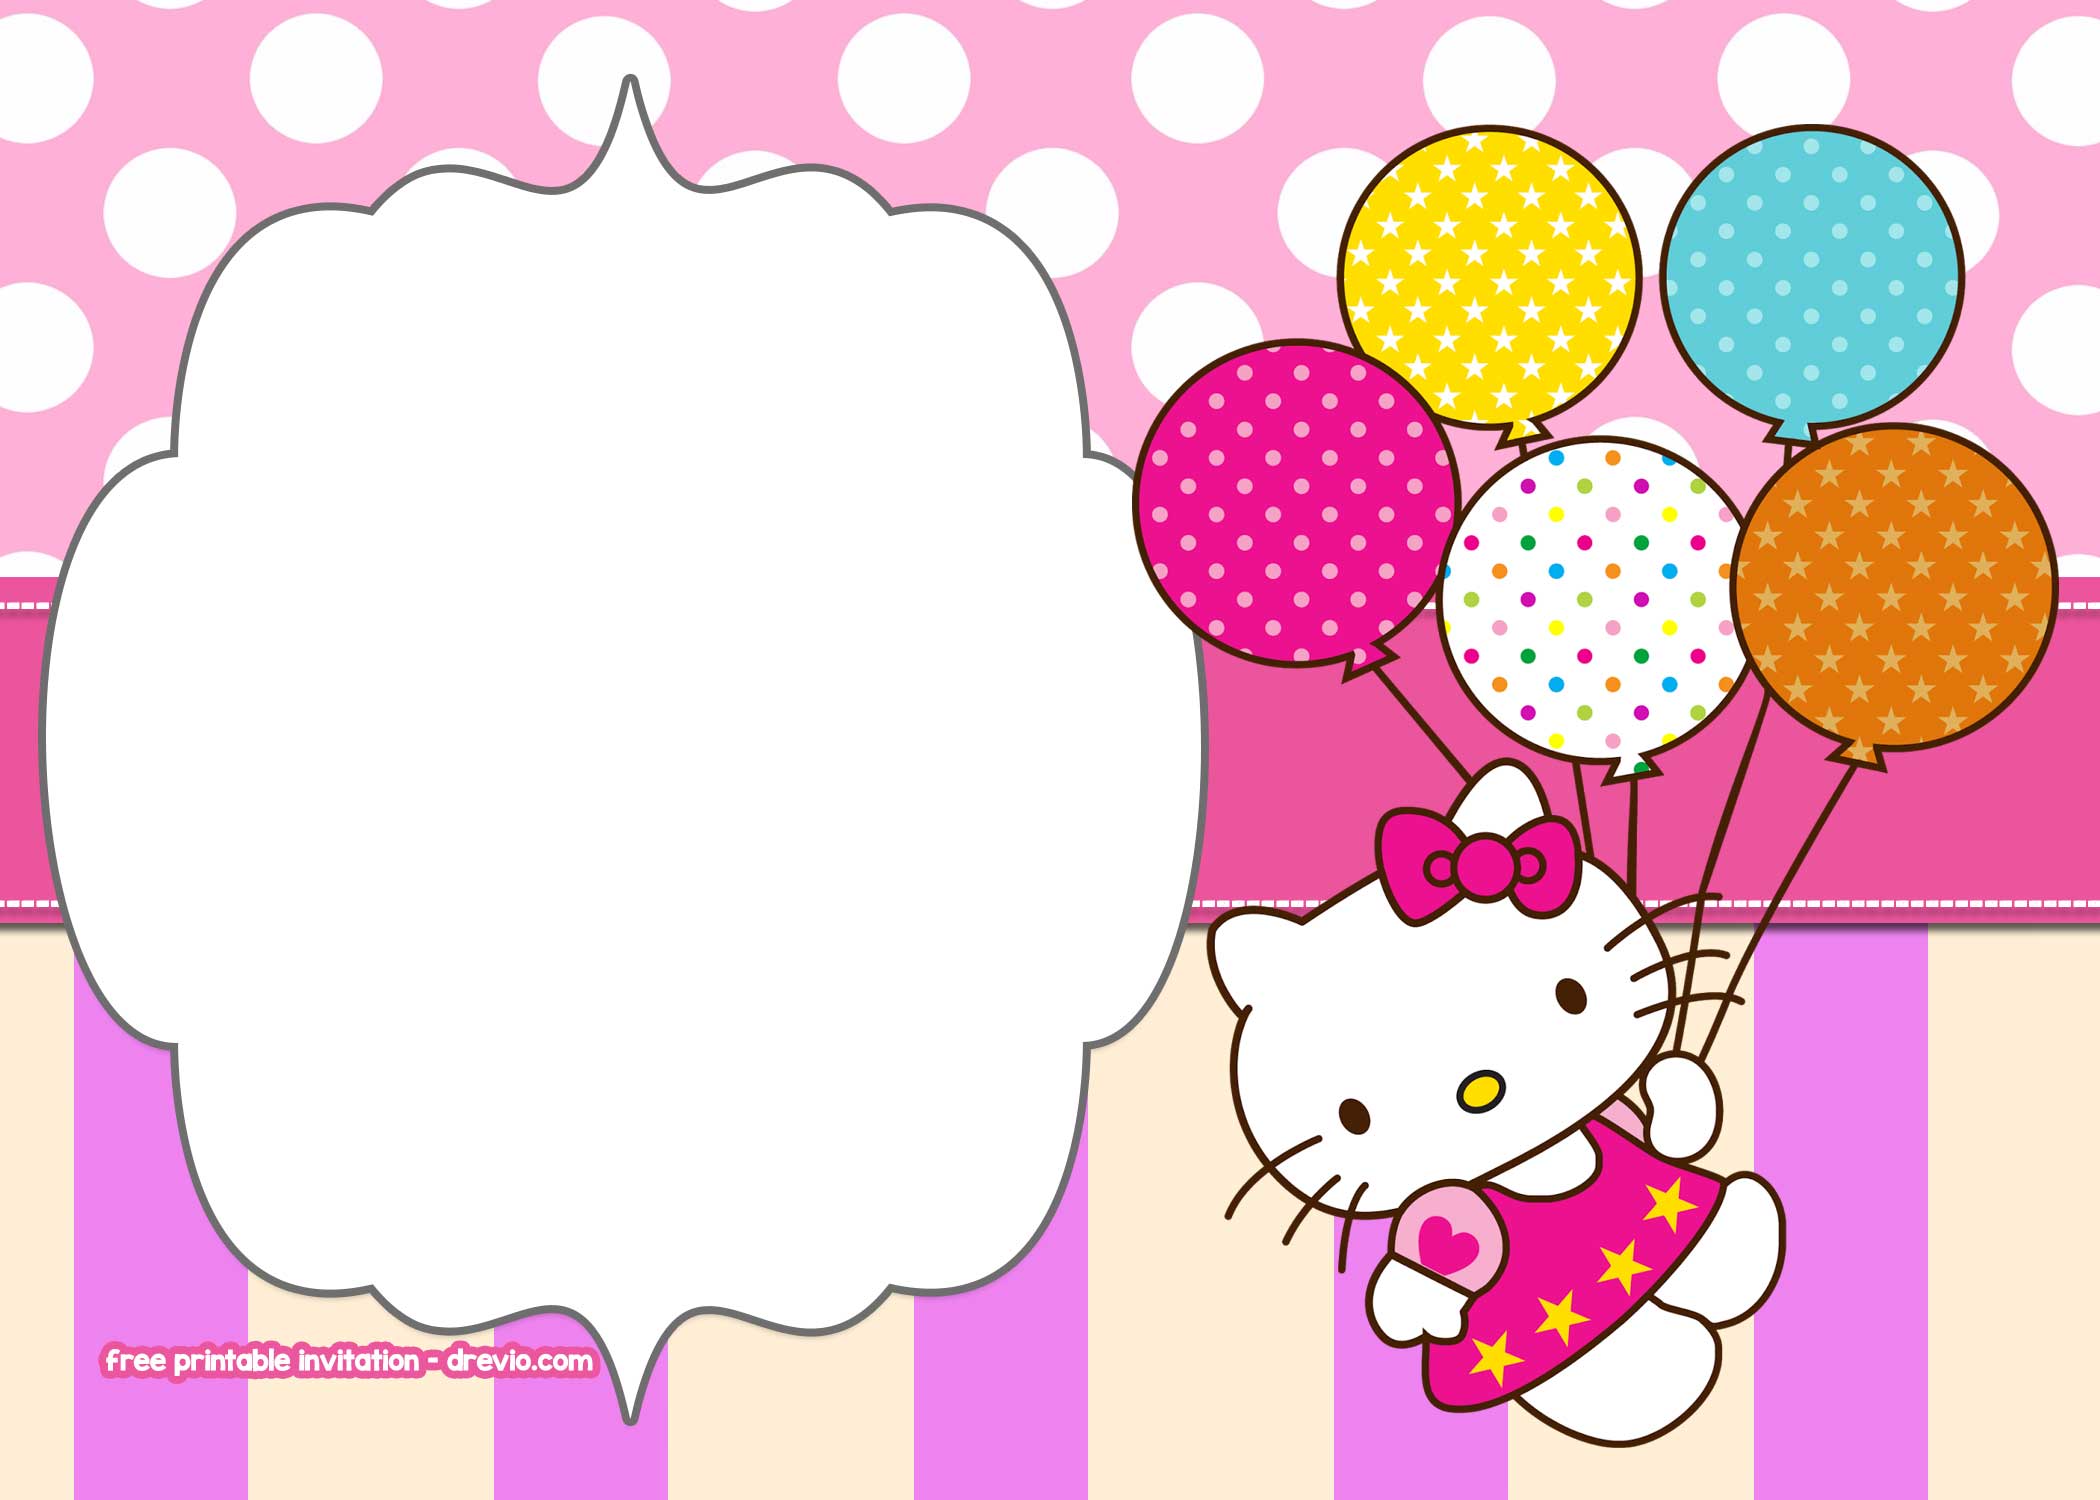 hello-kitty-birthday-background-sale-online-save-57-jlcatj-gob-mx